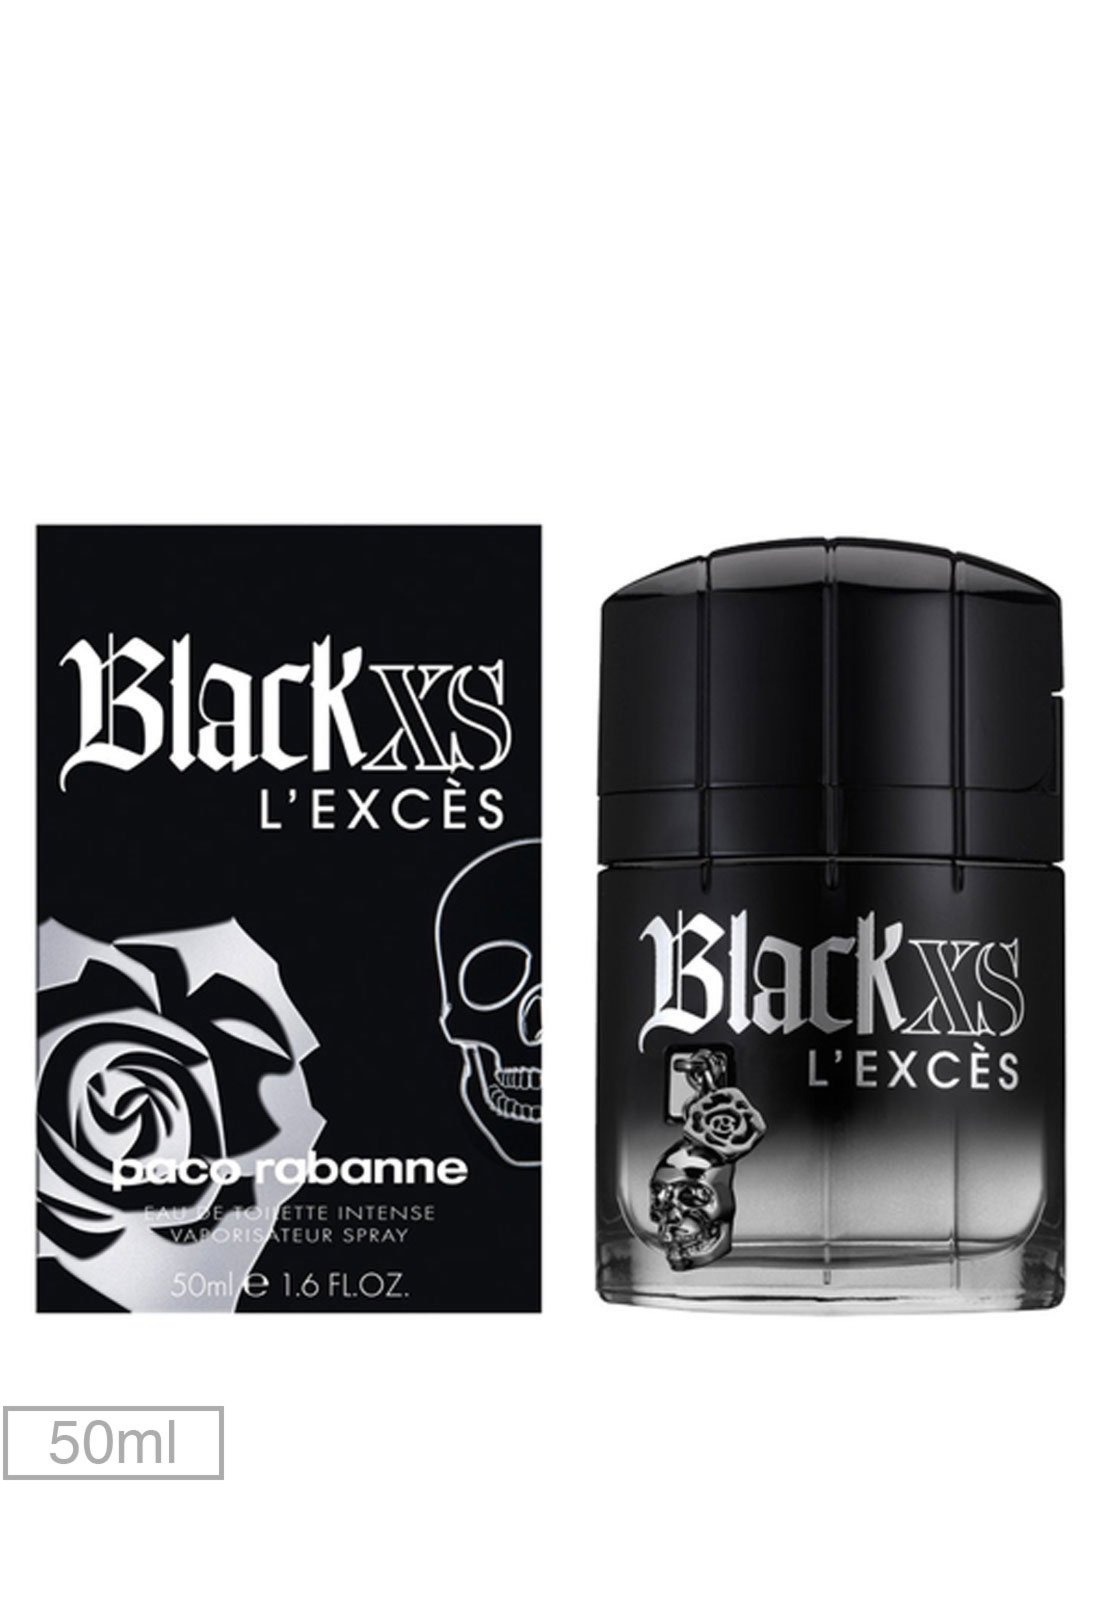 Paco-Rabanne-Perfume-Black-Xs-L%E2%80%99Exces-Paco-Rabanne-50ml-3153-0894211-1-zoom.jpg